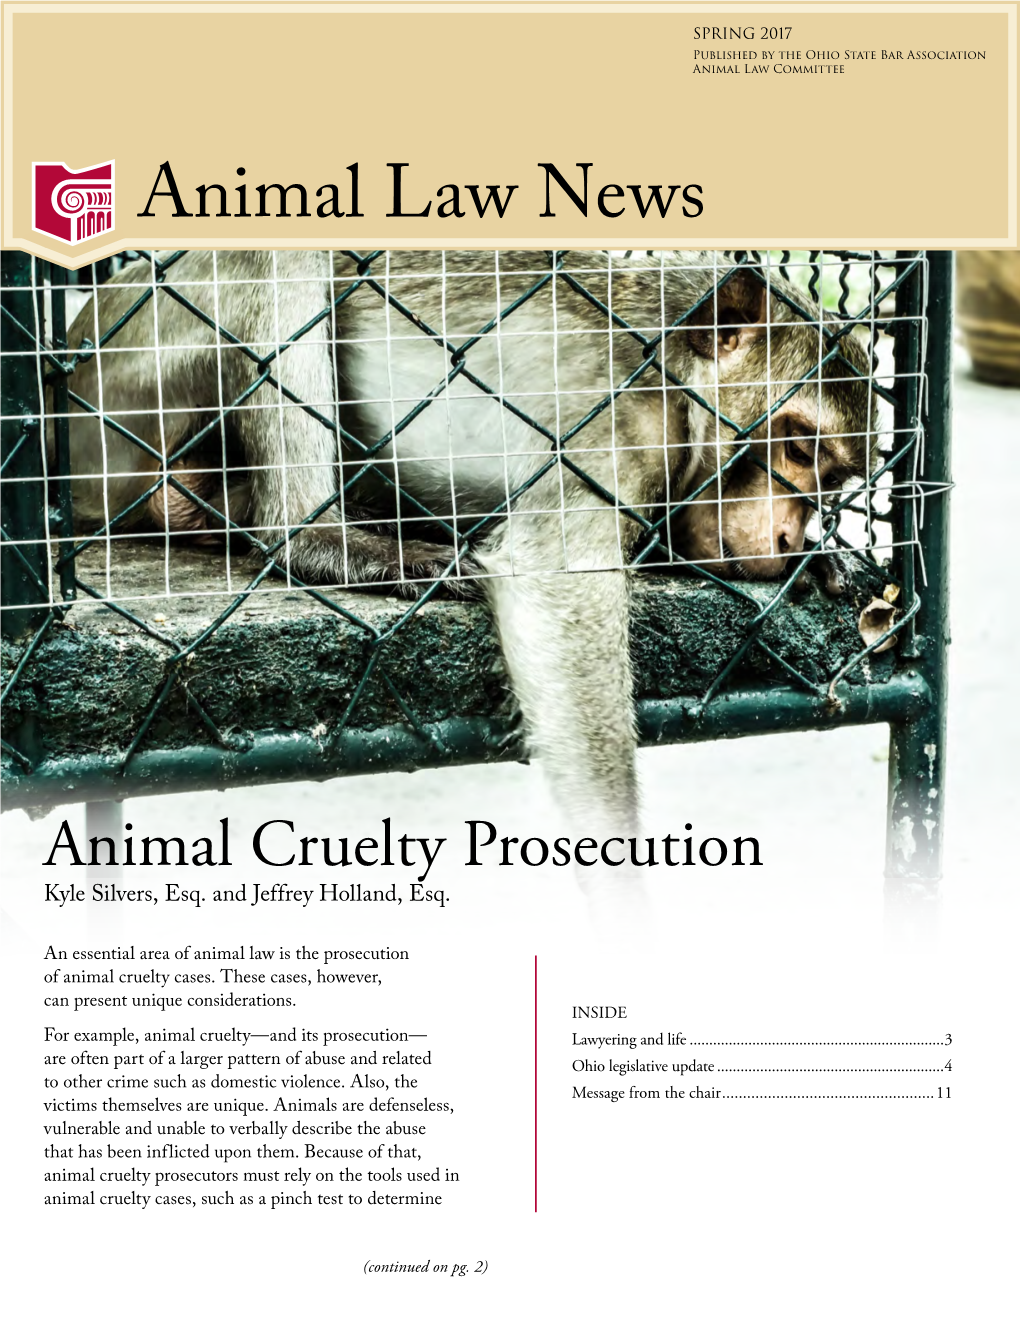 Animal Law News